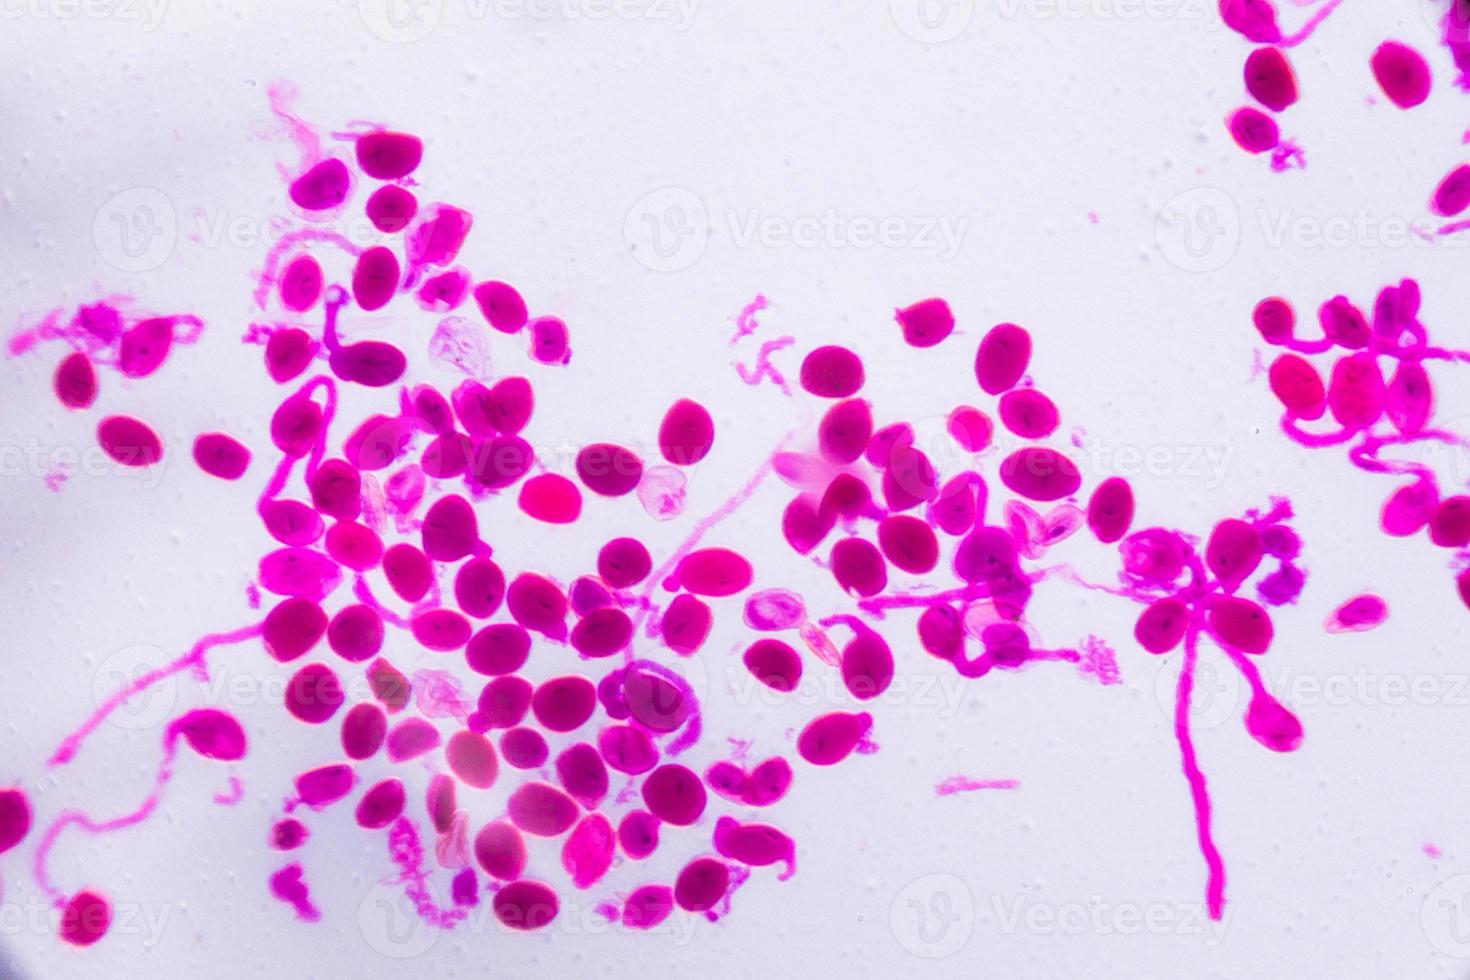 Hemerocallis citrina anthère mature au microscope - points roses abstraits sur fond blanc photo